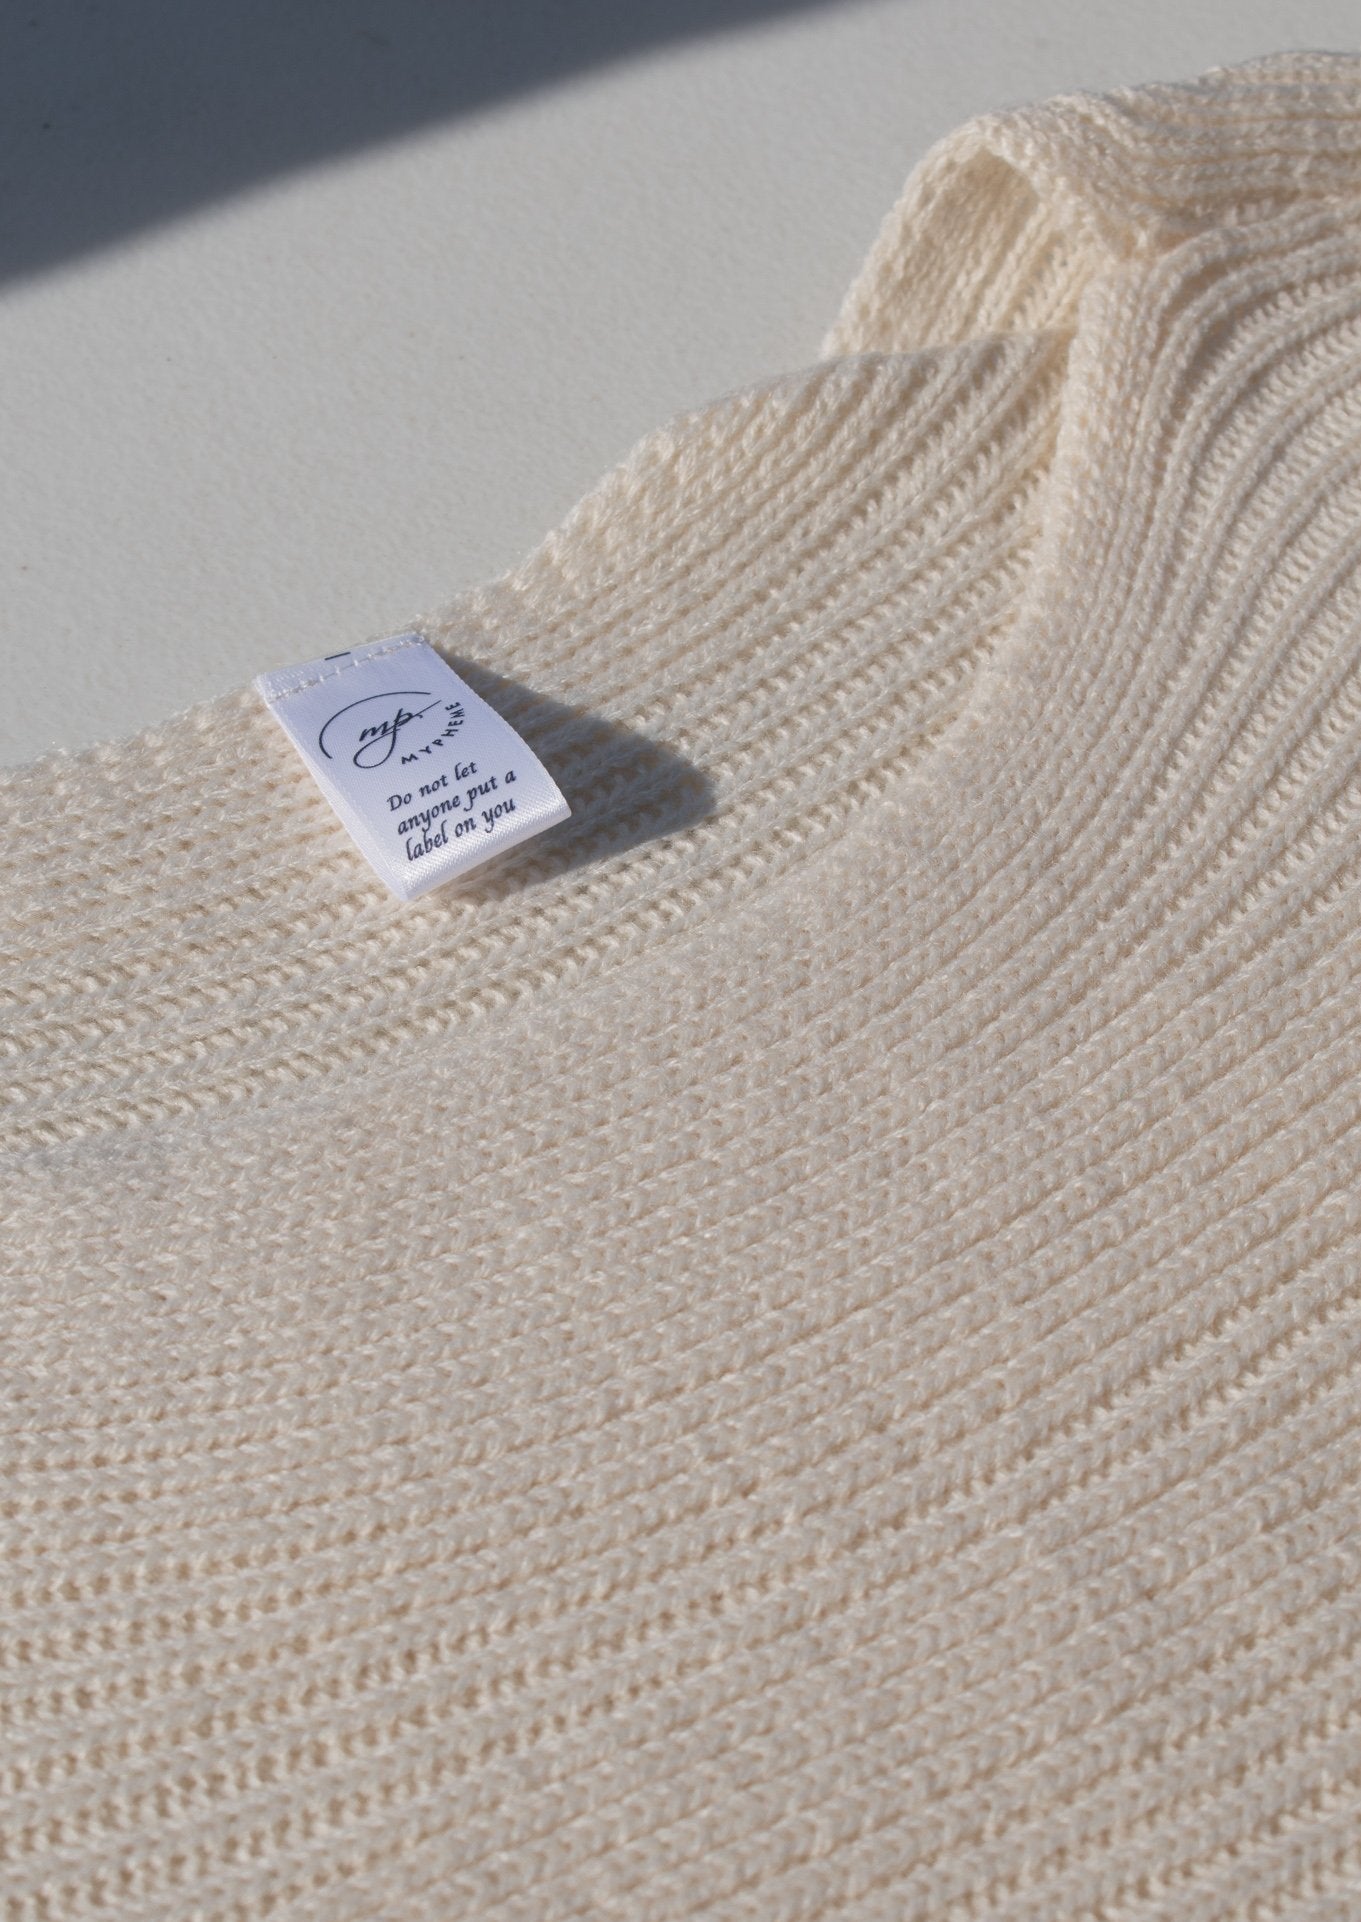 White Bell Sleeve Sweater - MYPHEME